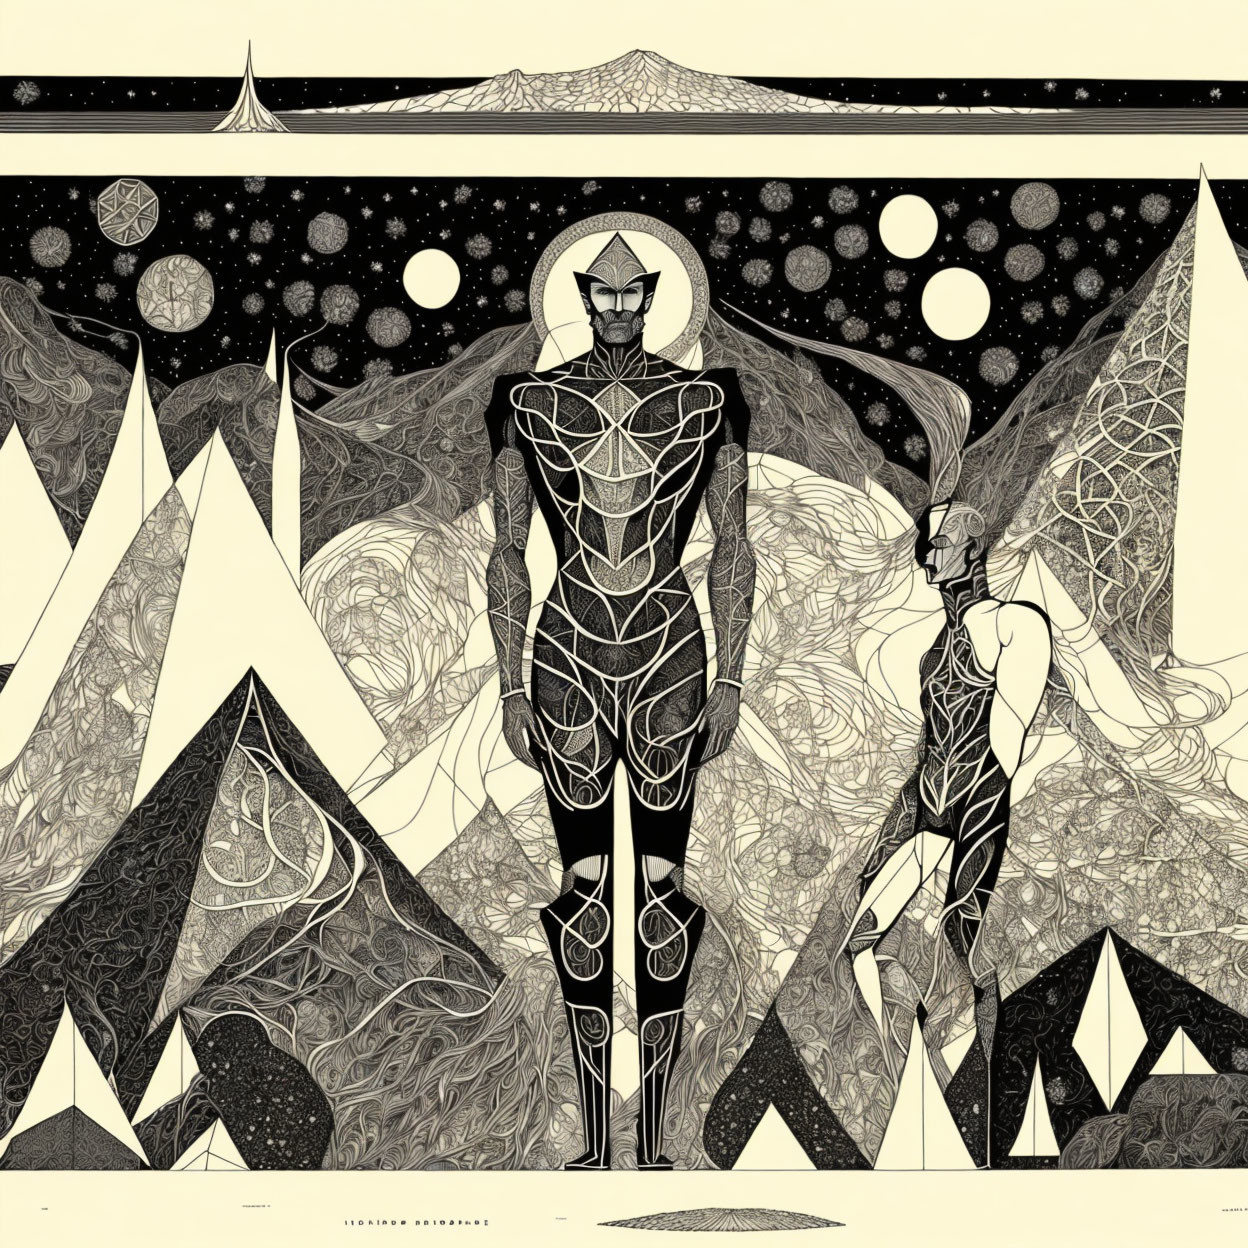 Stylized humanoid figure in mountain landscape under starry sky